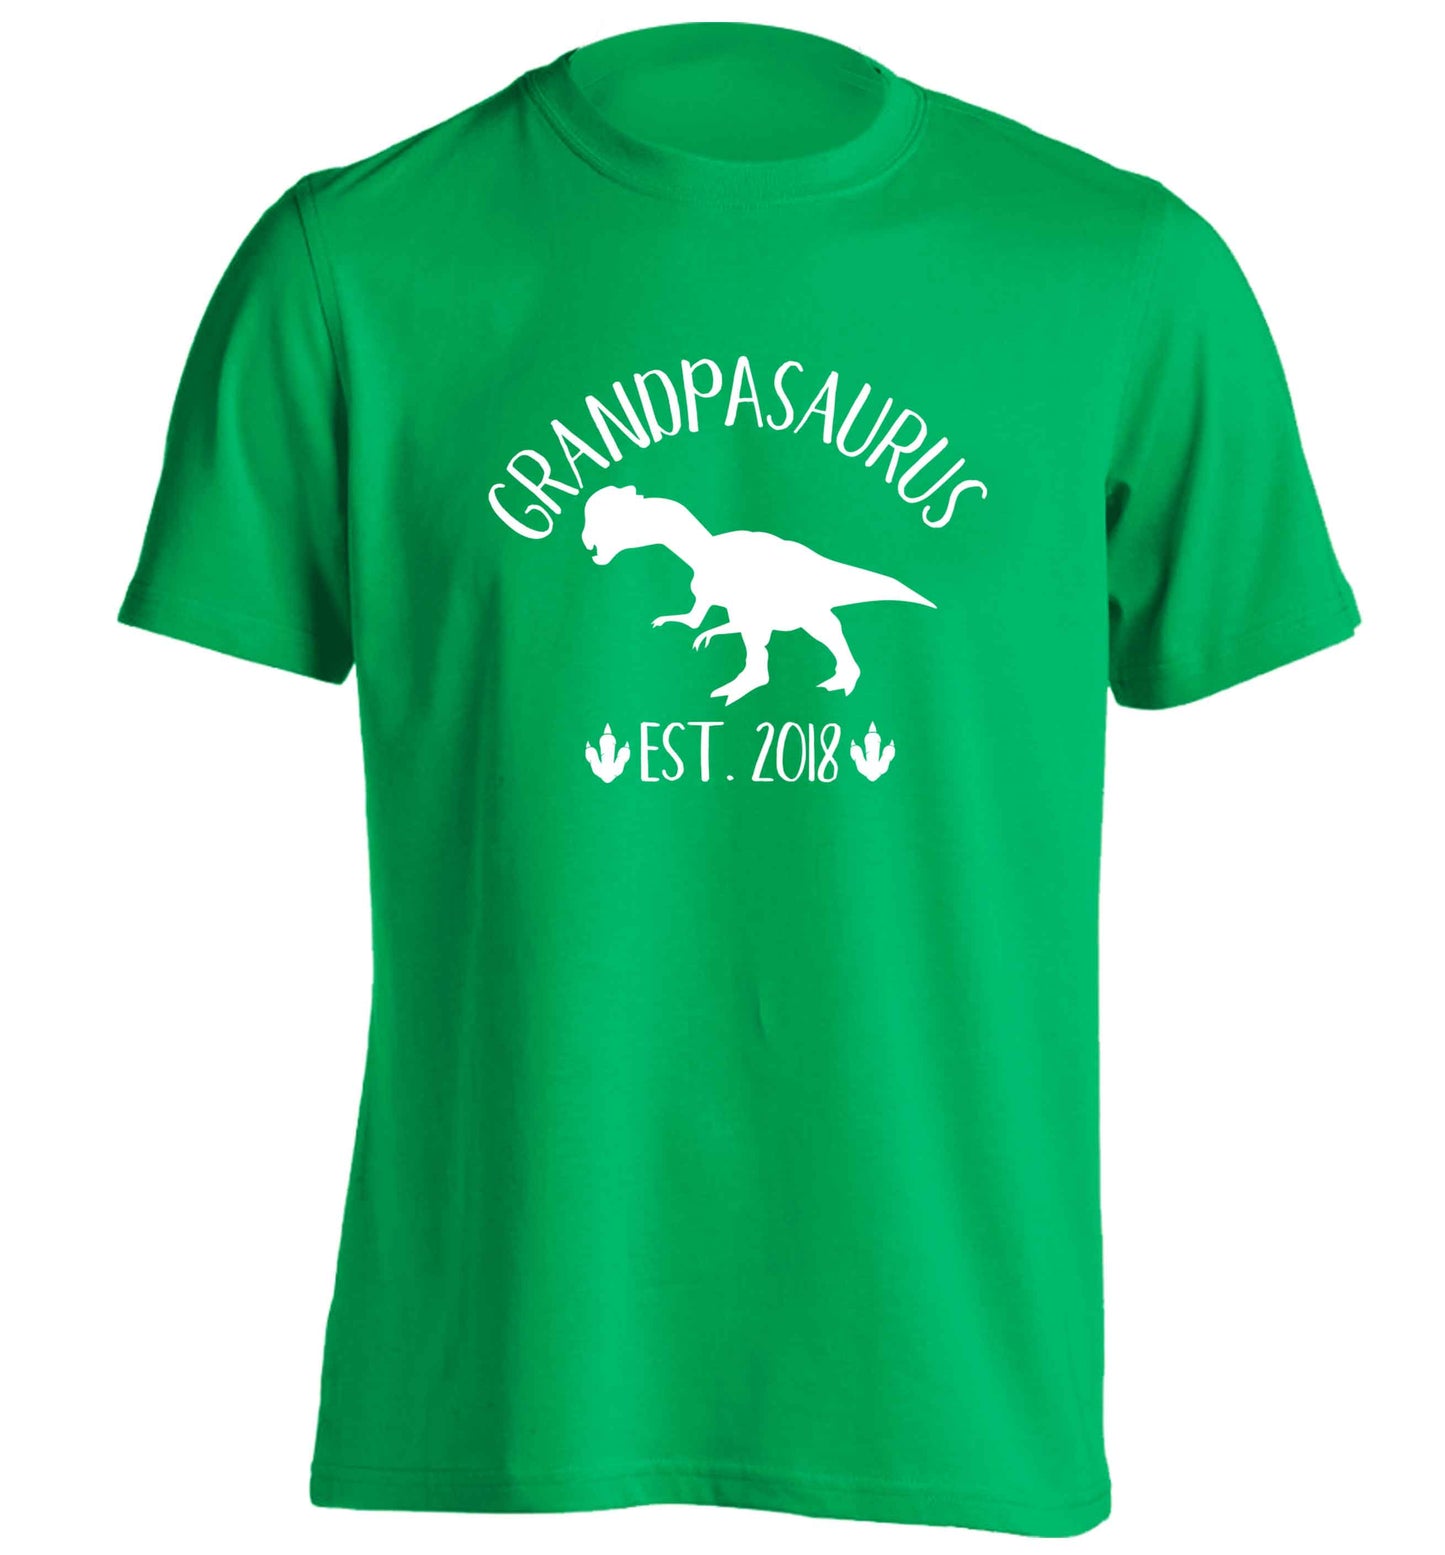 Personalised grandpasaurus since (custom date) adults unisex green Tshirt 2XL